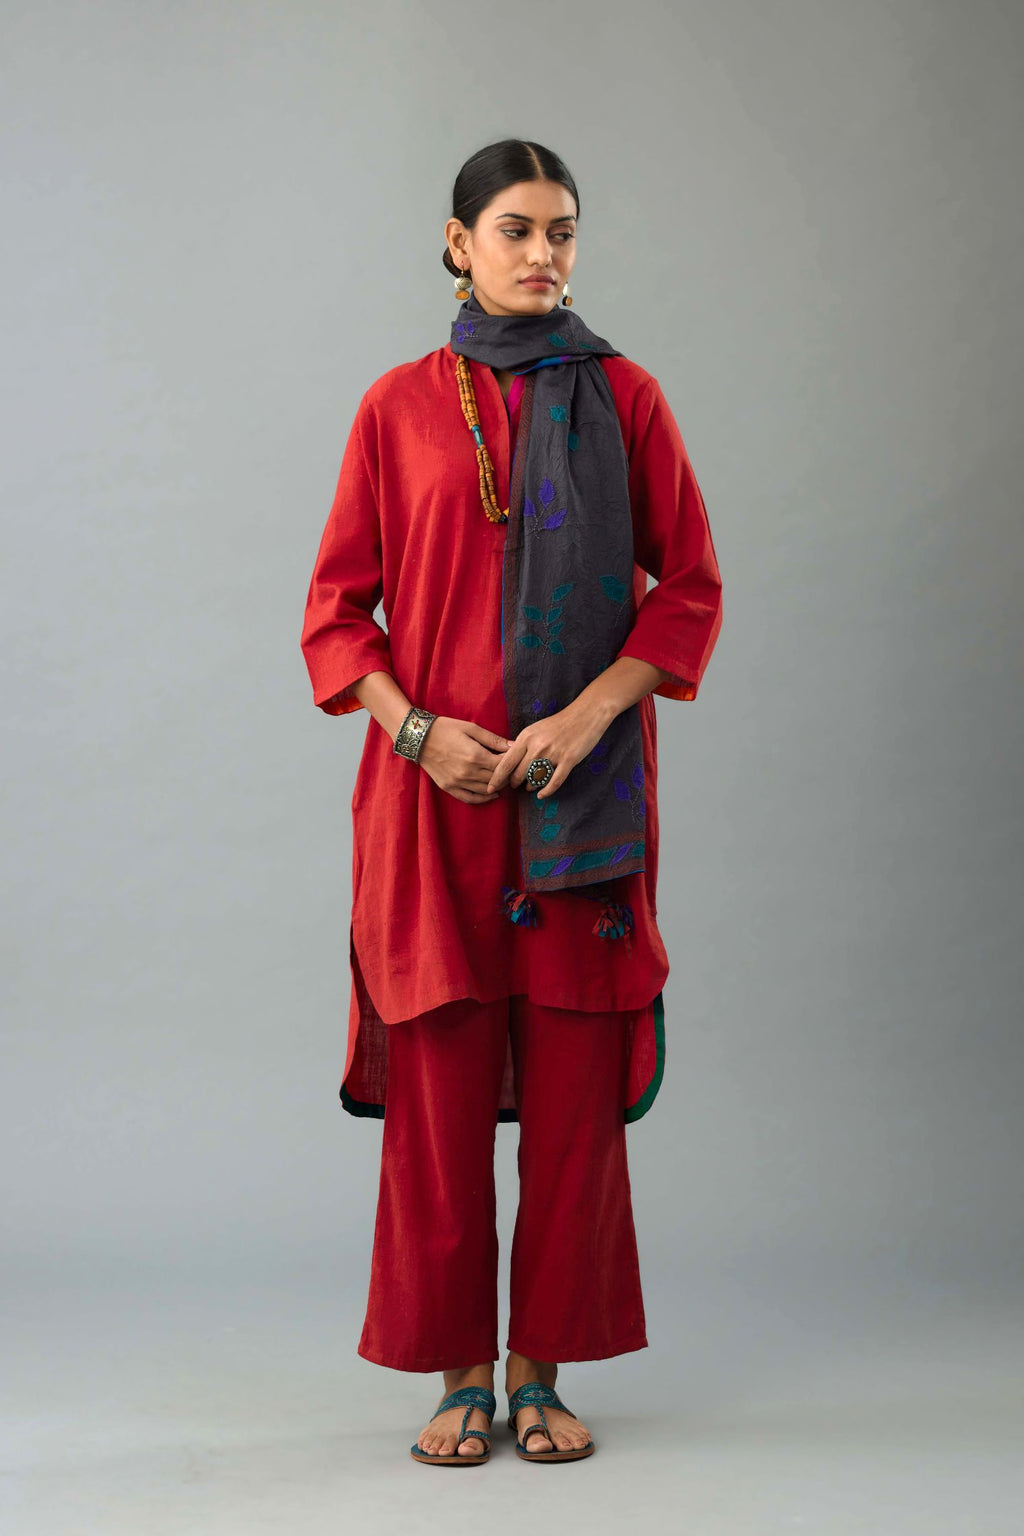 Red Handloom Cotton kurta set with collar neckline and 3/4 sleeves.